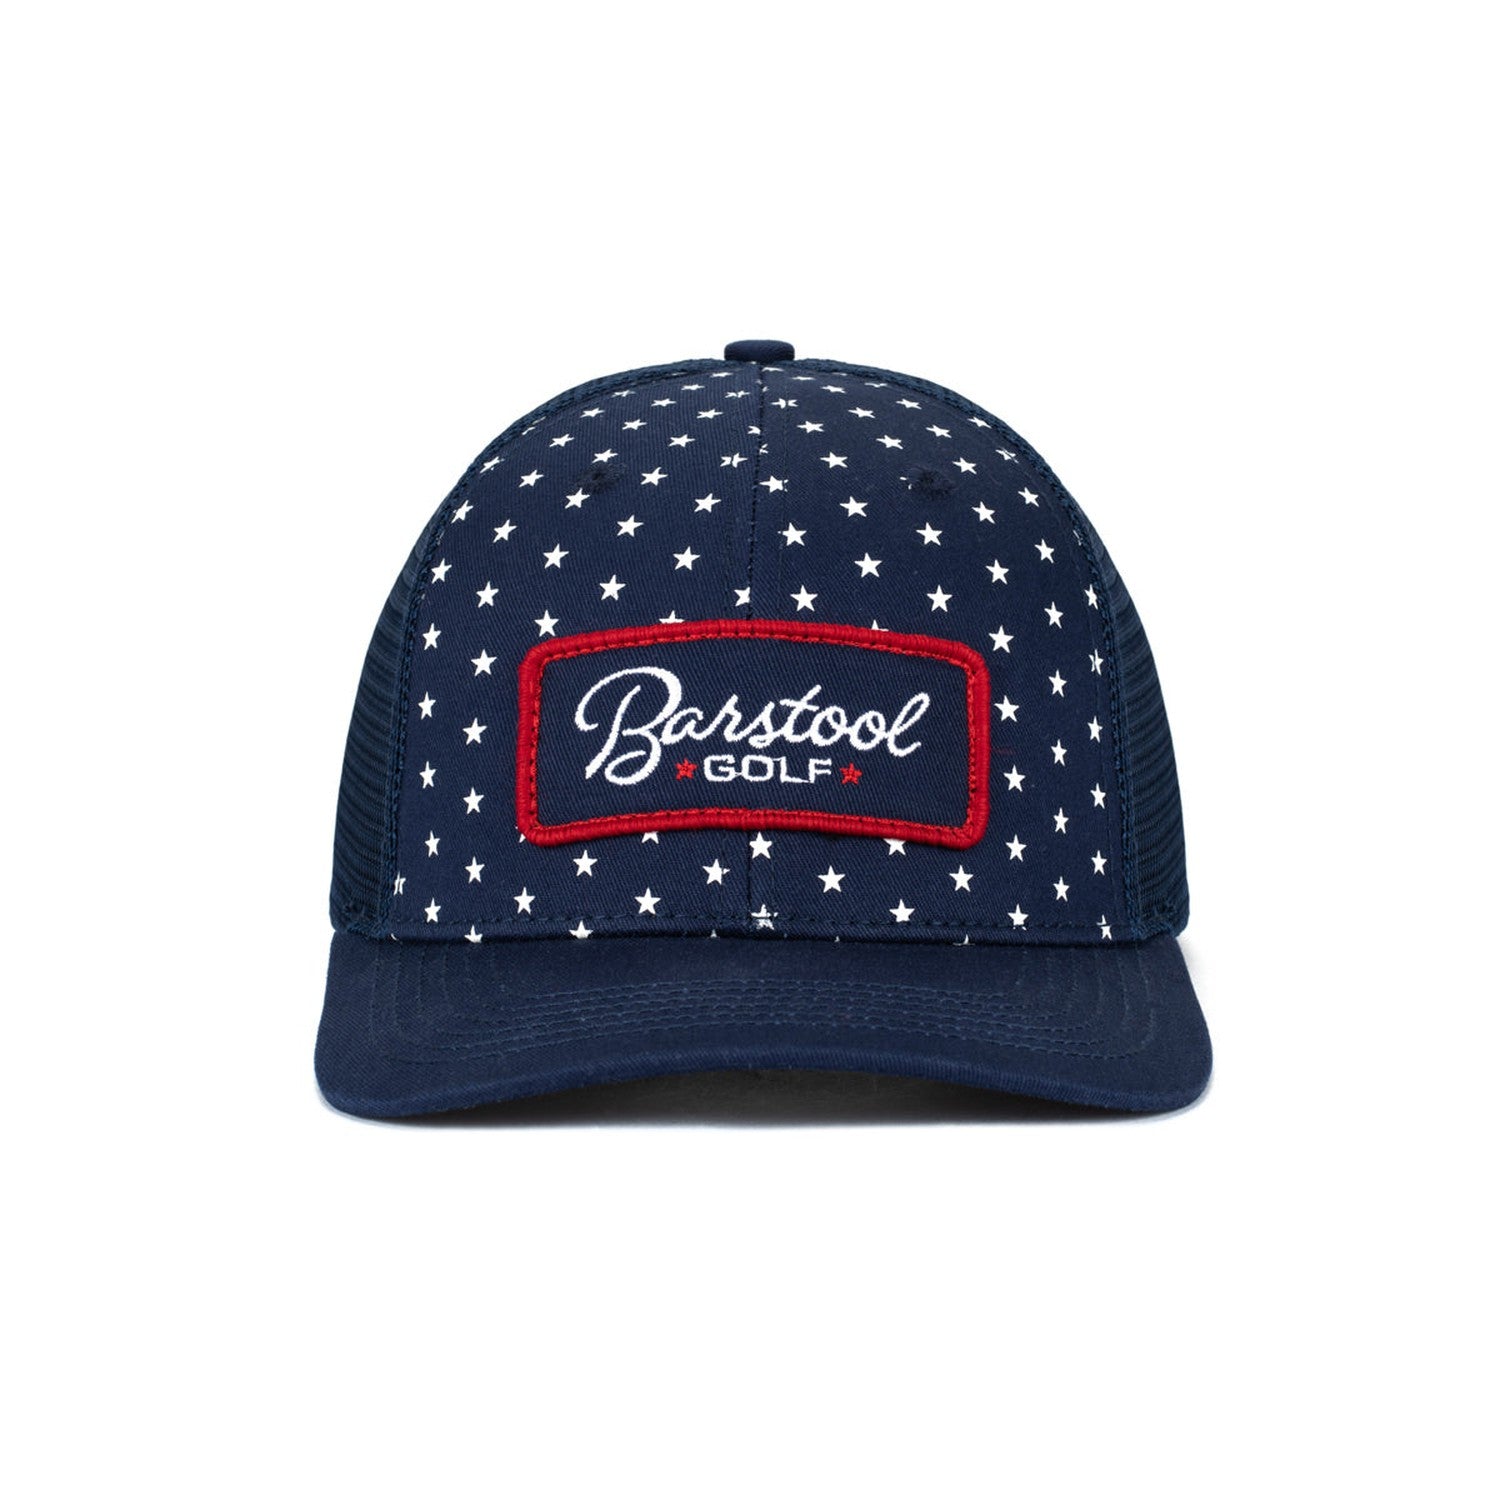 Barstool Golf Americana Trucker Hat